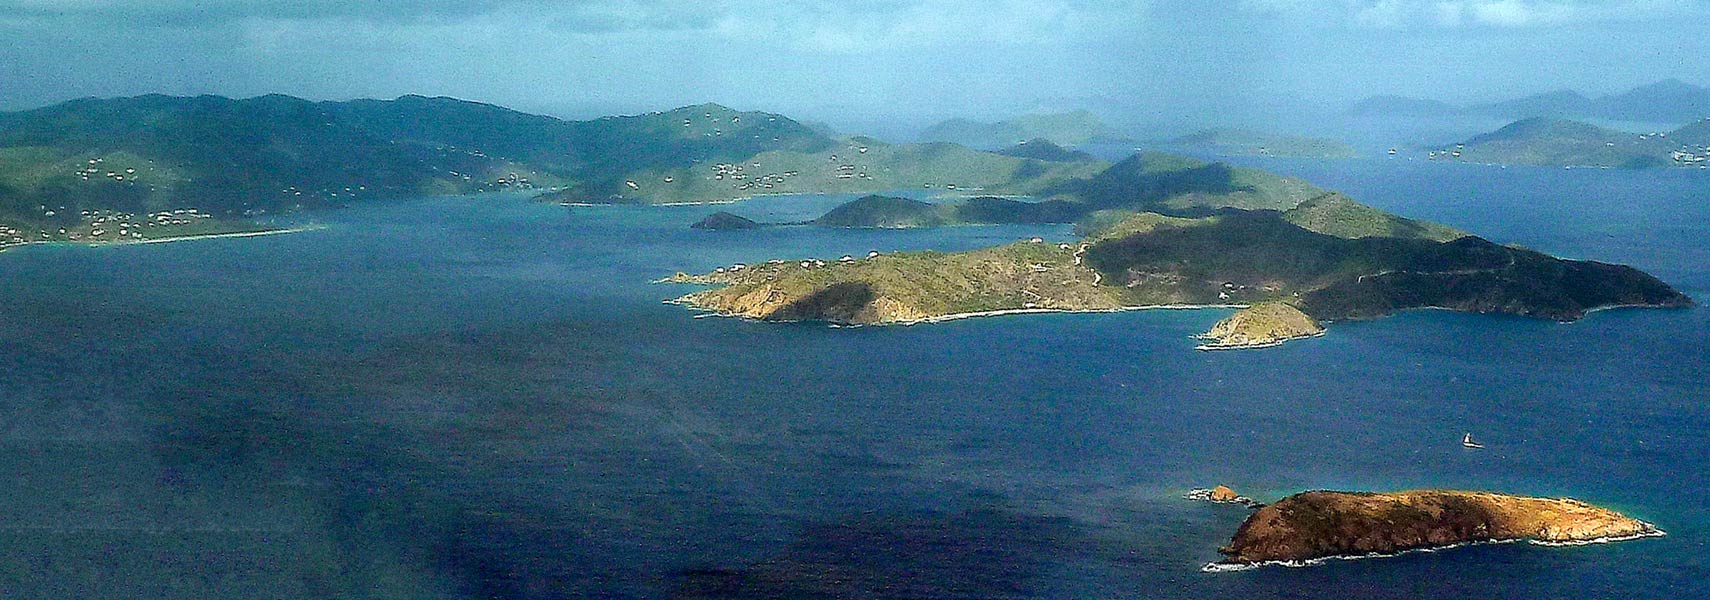 Aerial view of St. John, British Virgin Islands